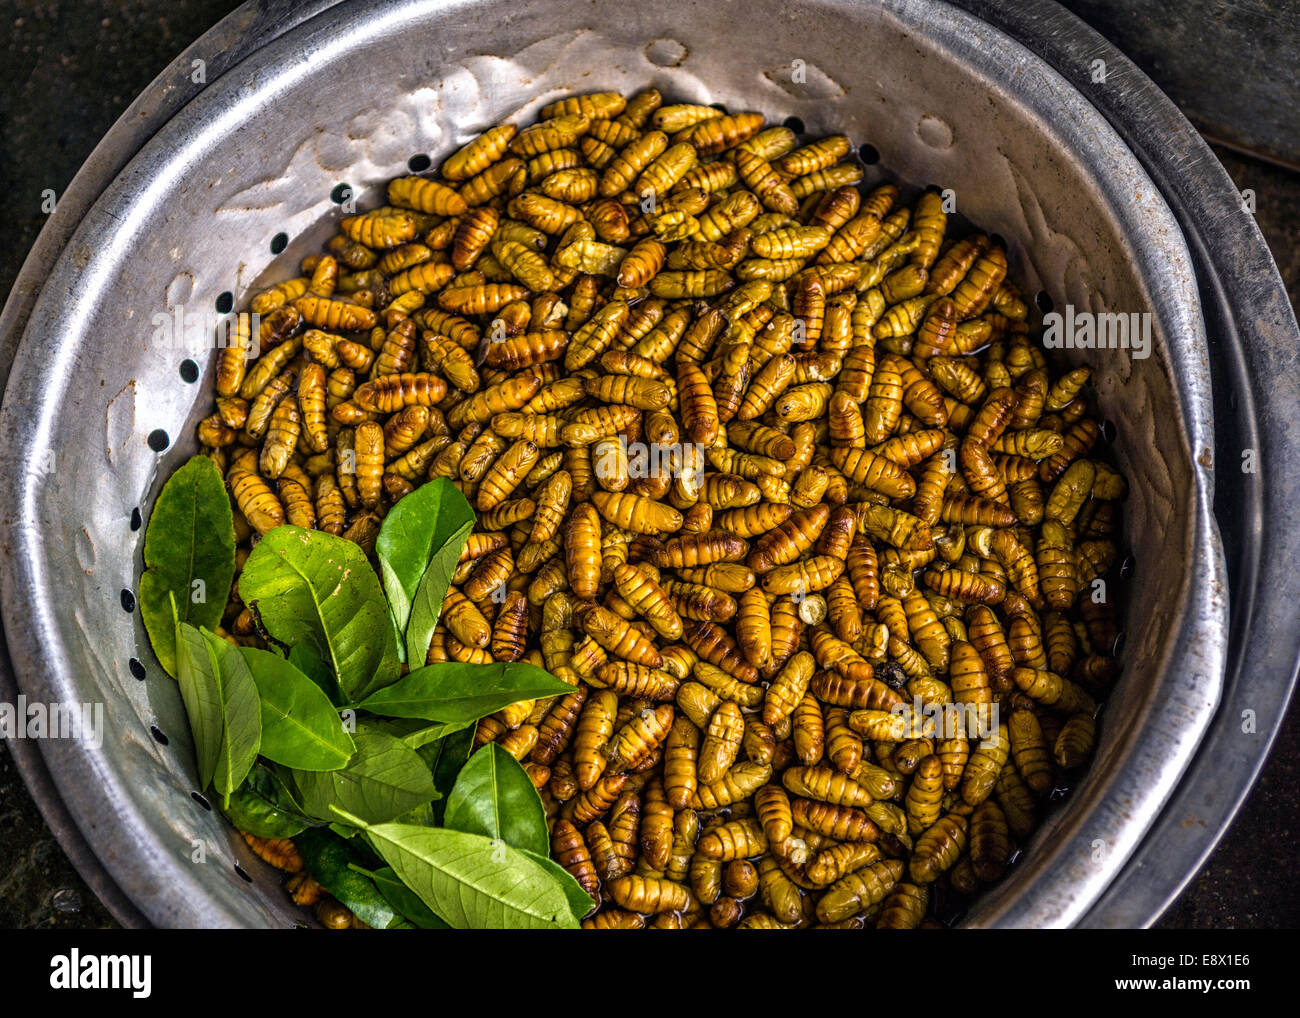 Vietnam Sa Pa: Basin filled with brown yellow maggots on market Stock Photo  - Alamy